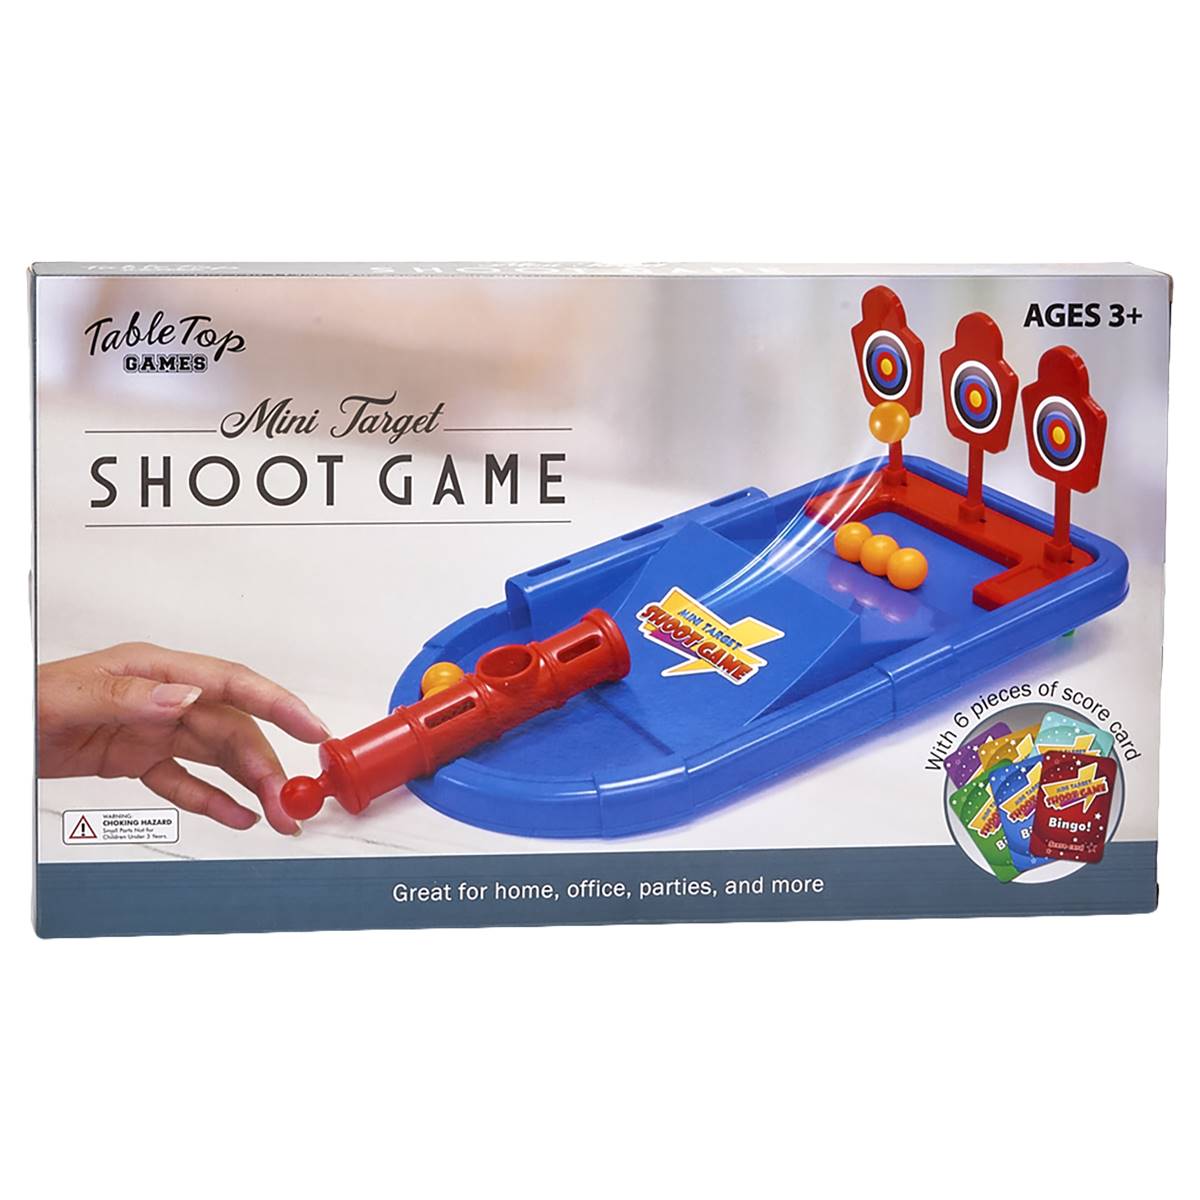 Tabletop Games Mini Target Shoot Game